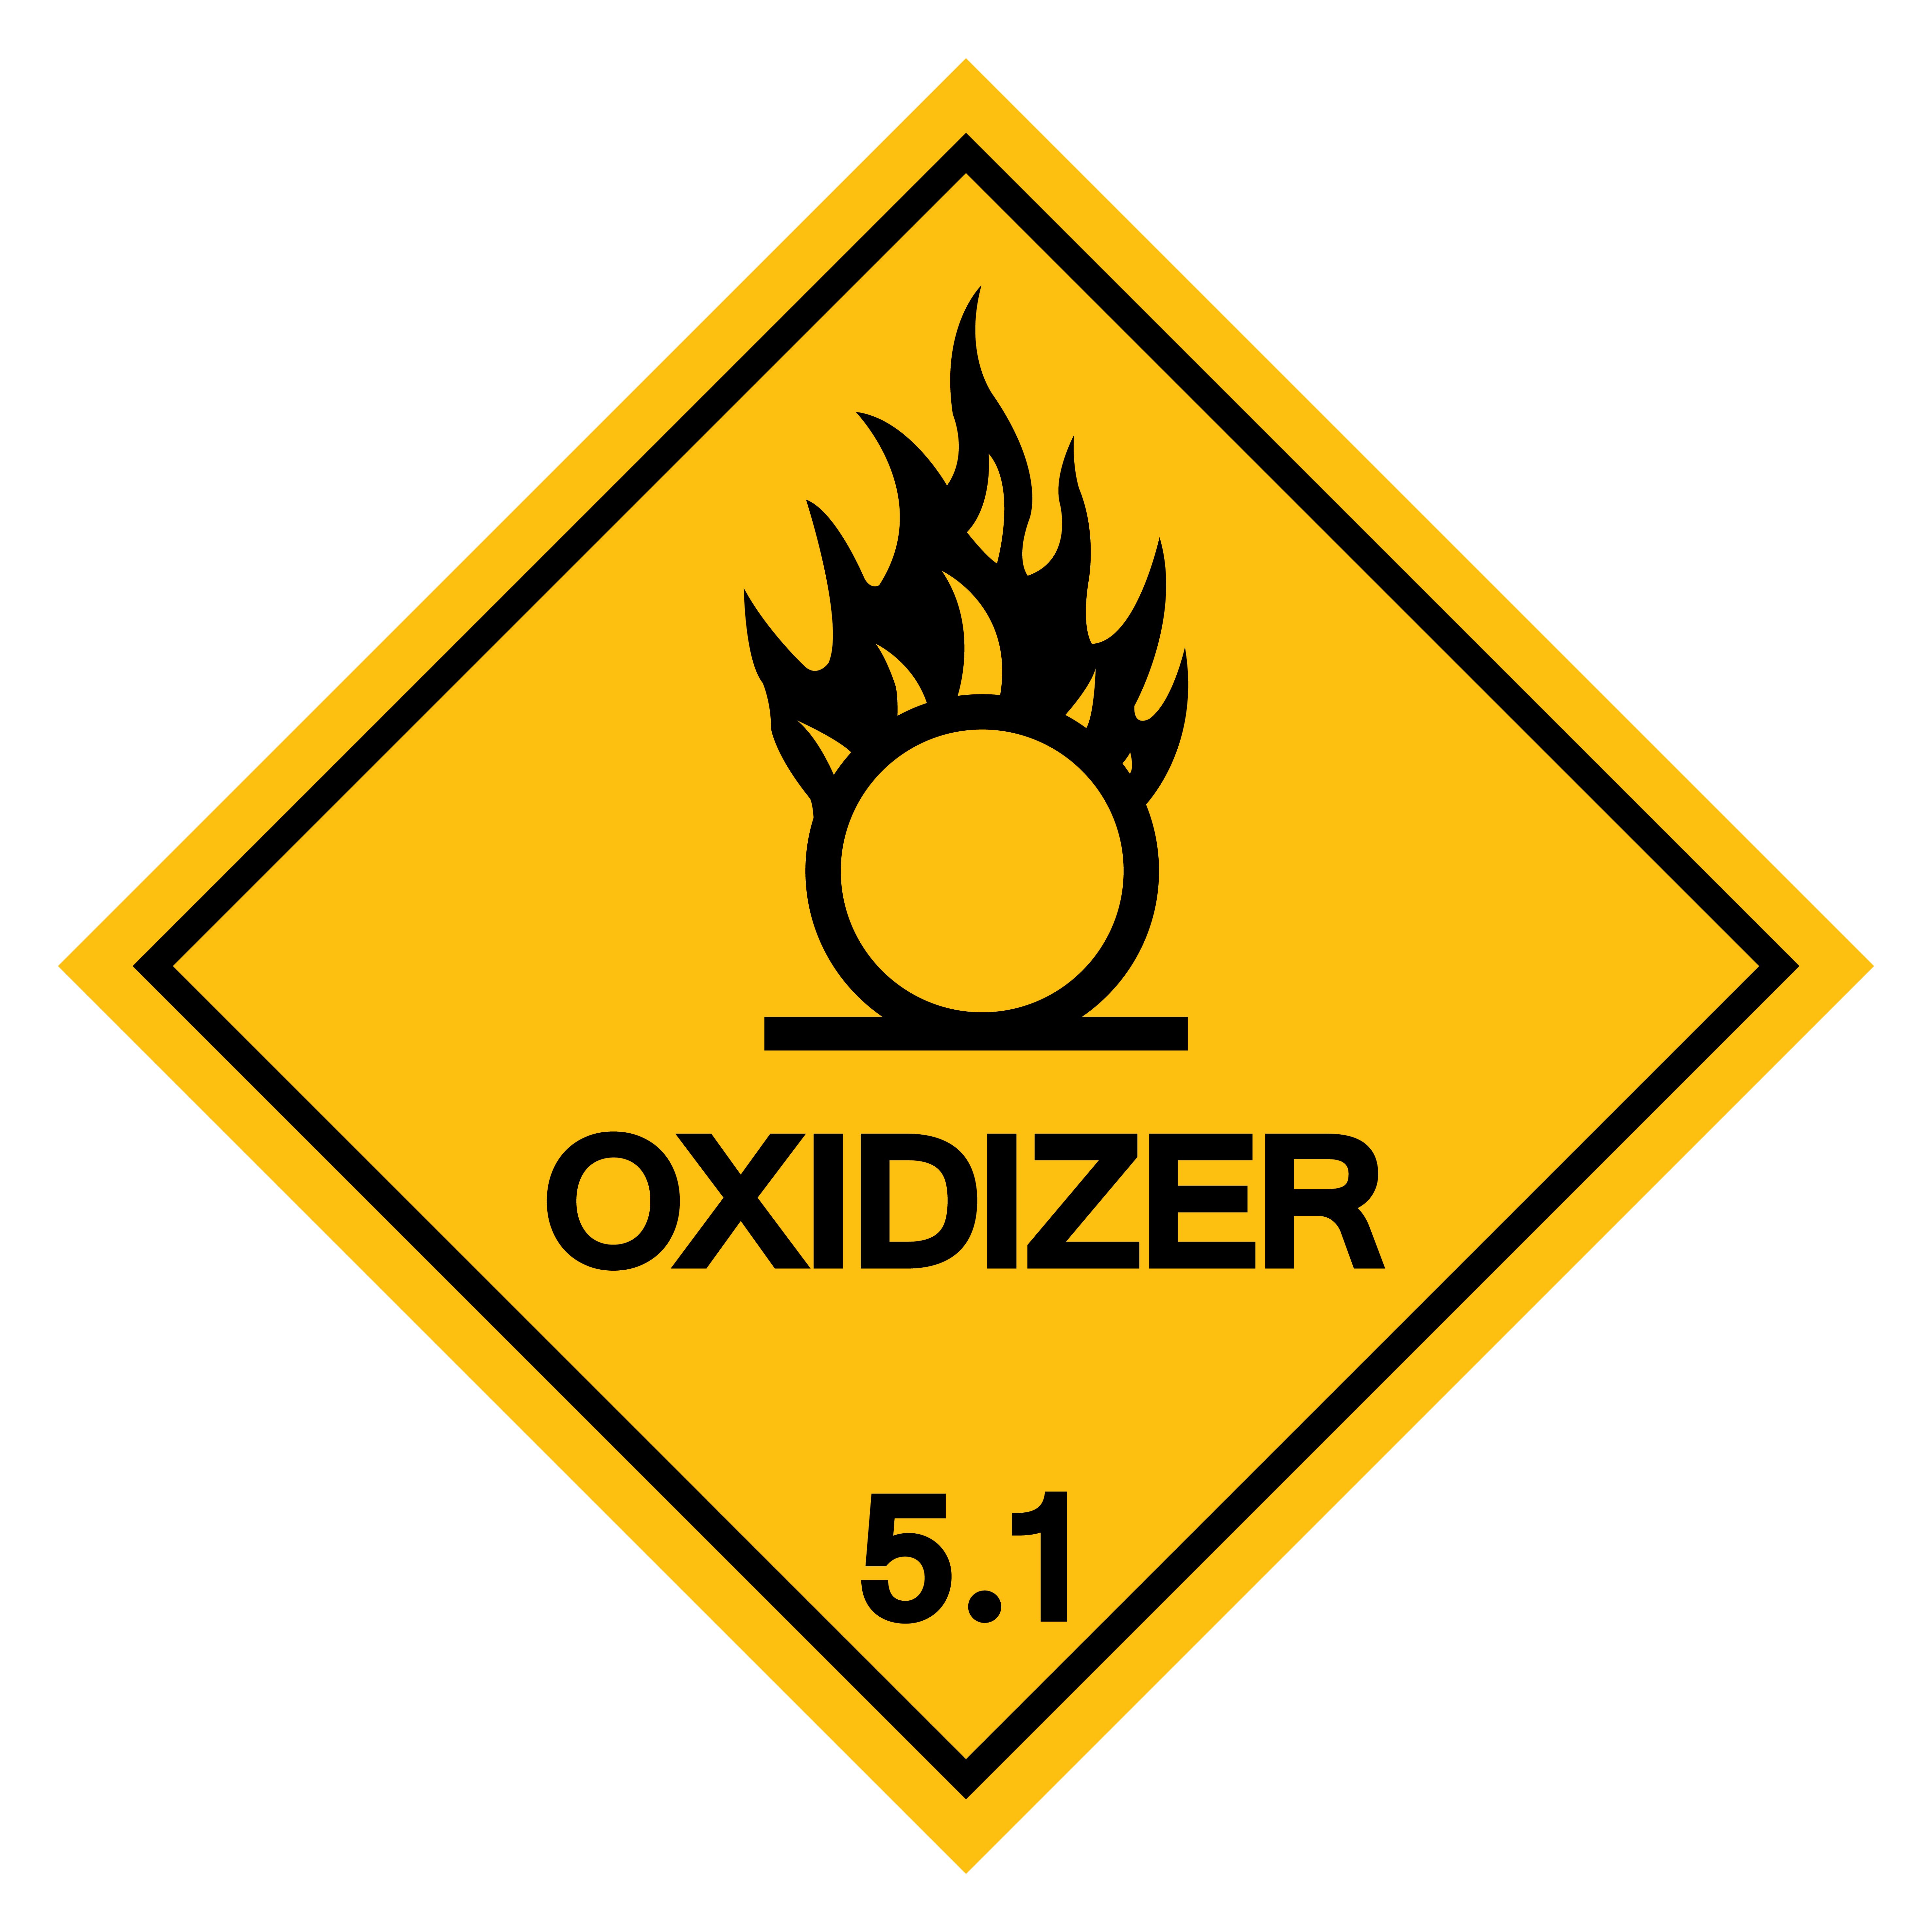 Oxidizer warning sign